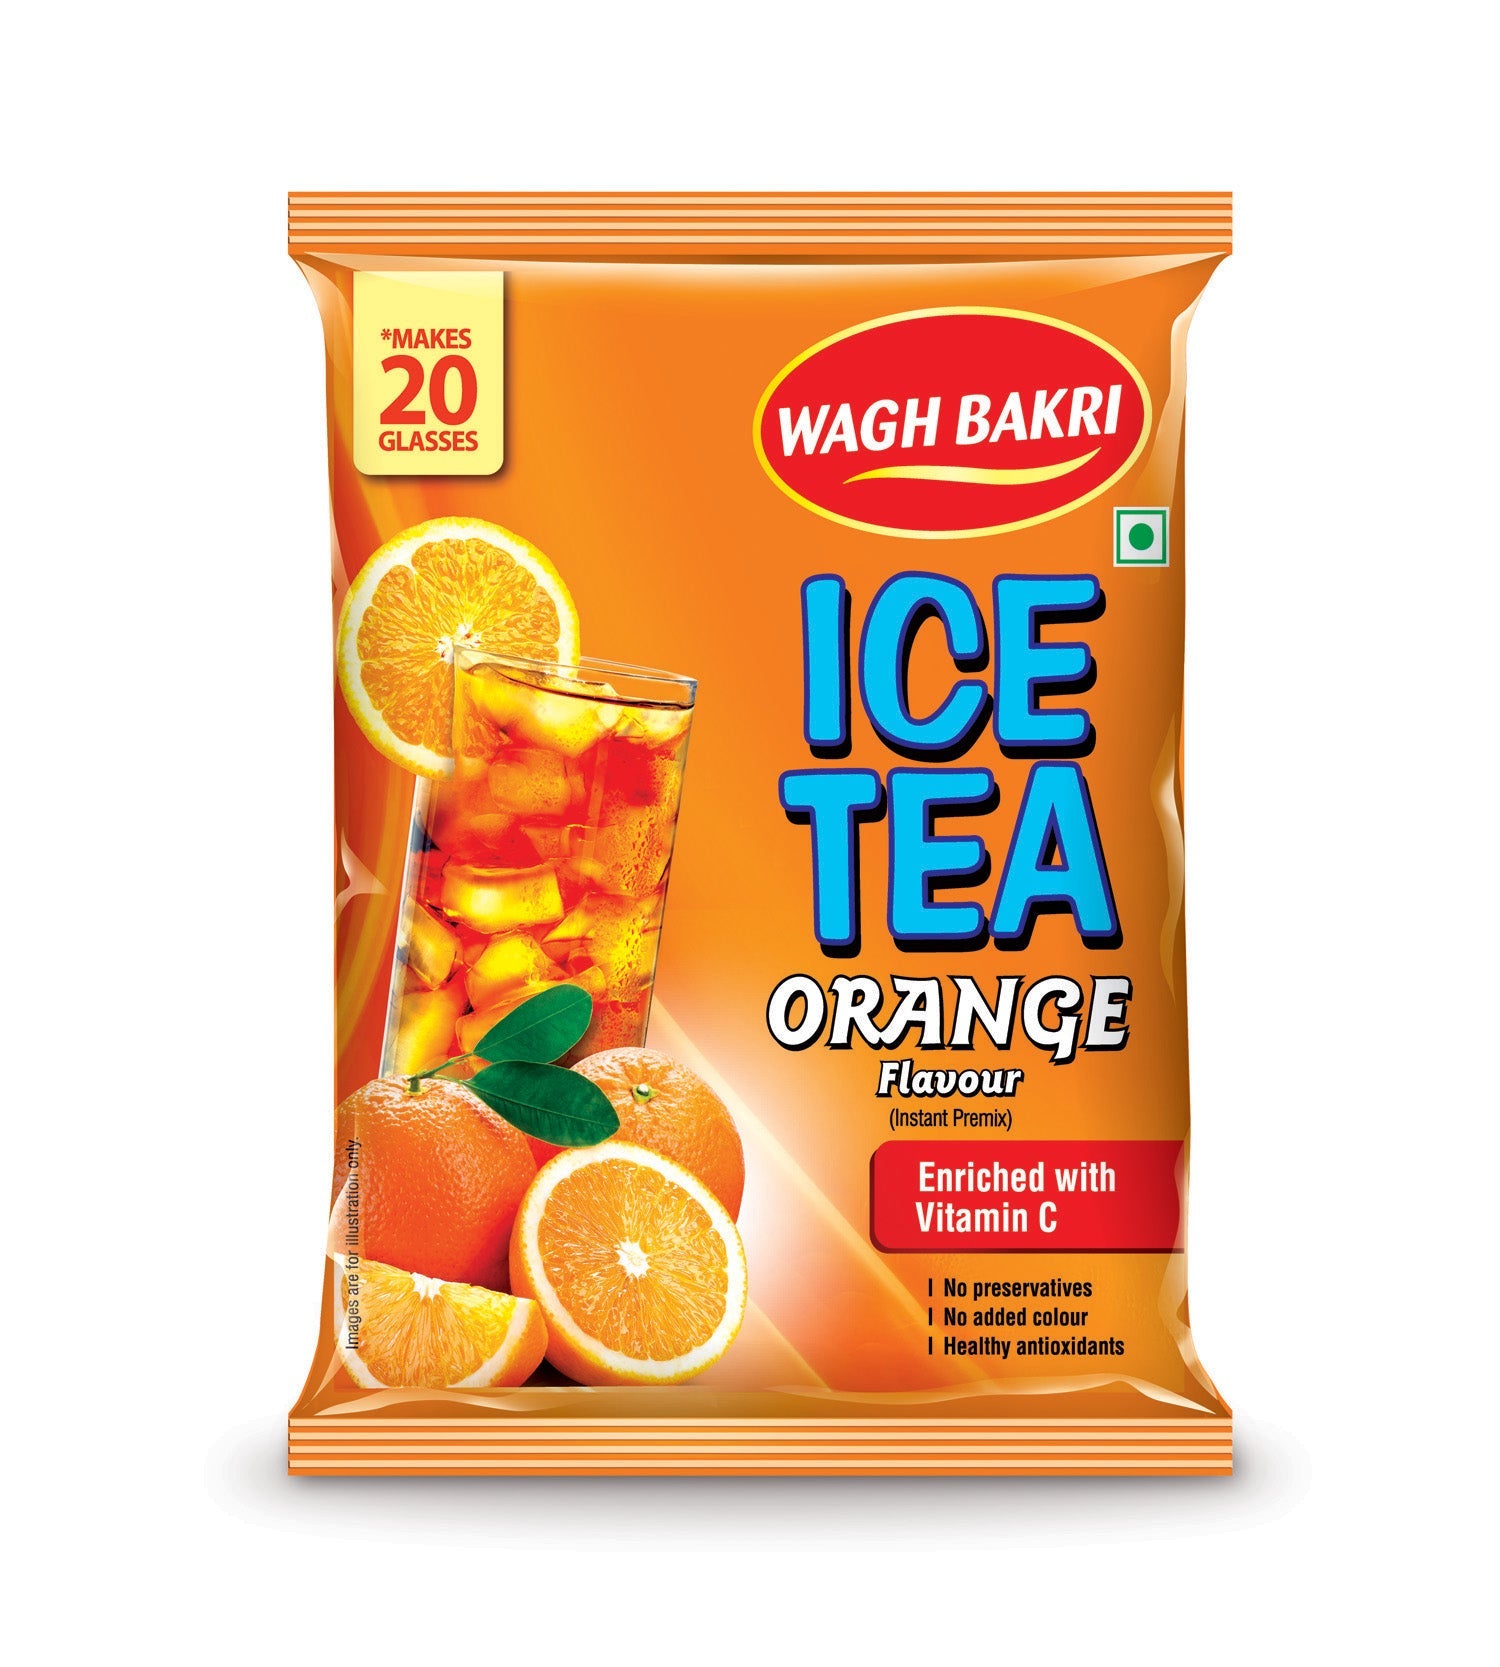 Wagh Bakri Ice Tea Buy 2 Get 2 free - Peach + Orange + Cranberry + Lemon